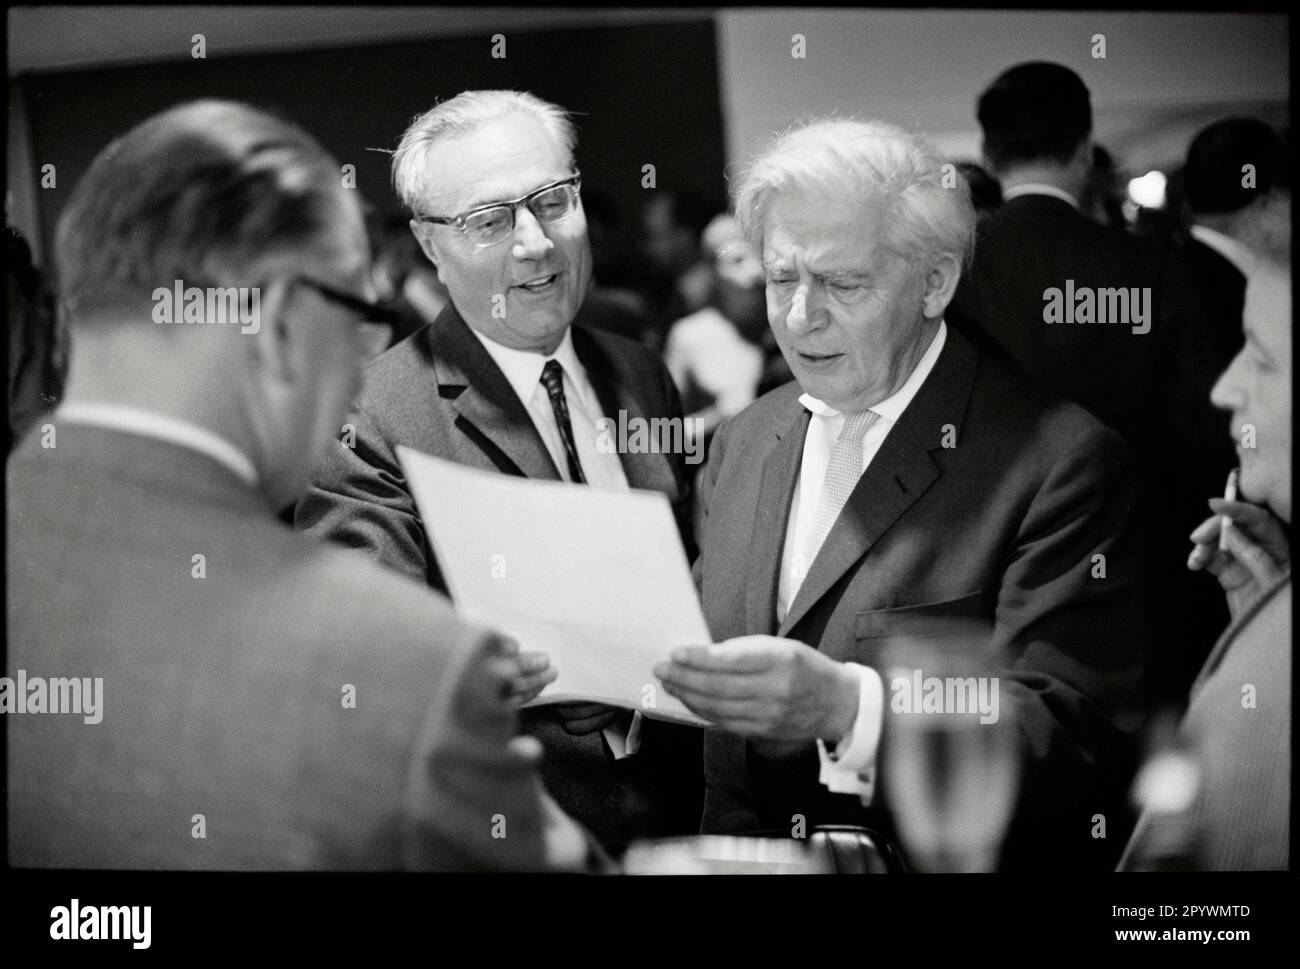 Germania. Amburgo. 1964. Direttore Josef Mueller-Marein. Celebrazione presso la redazione del settimanale Die Zeit. M-GE-ZEI-034 Copyright Notice: Max Scheler/SZ Photo. Foto Stock